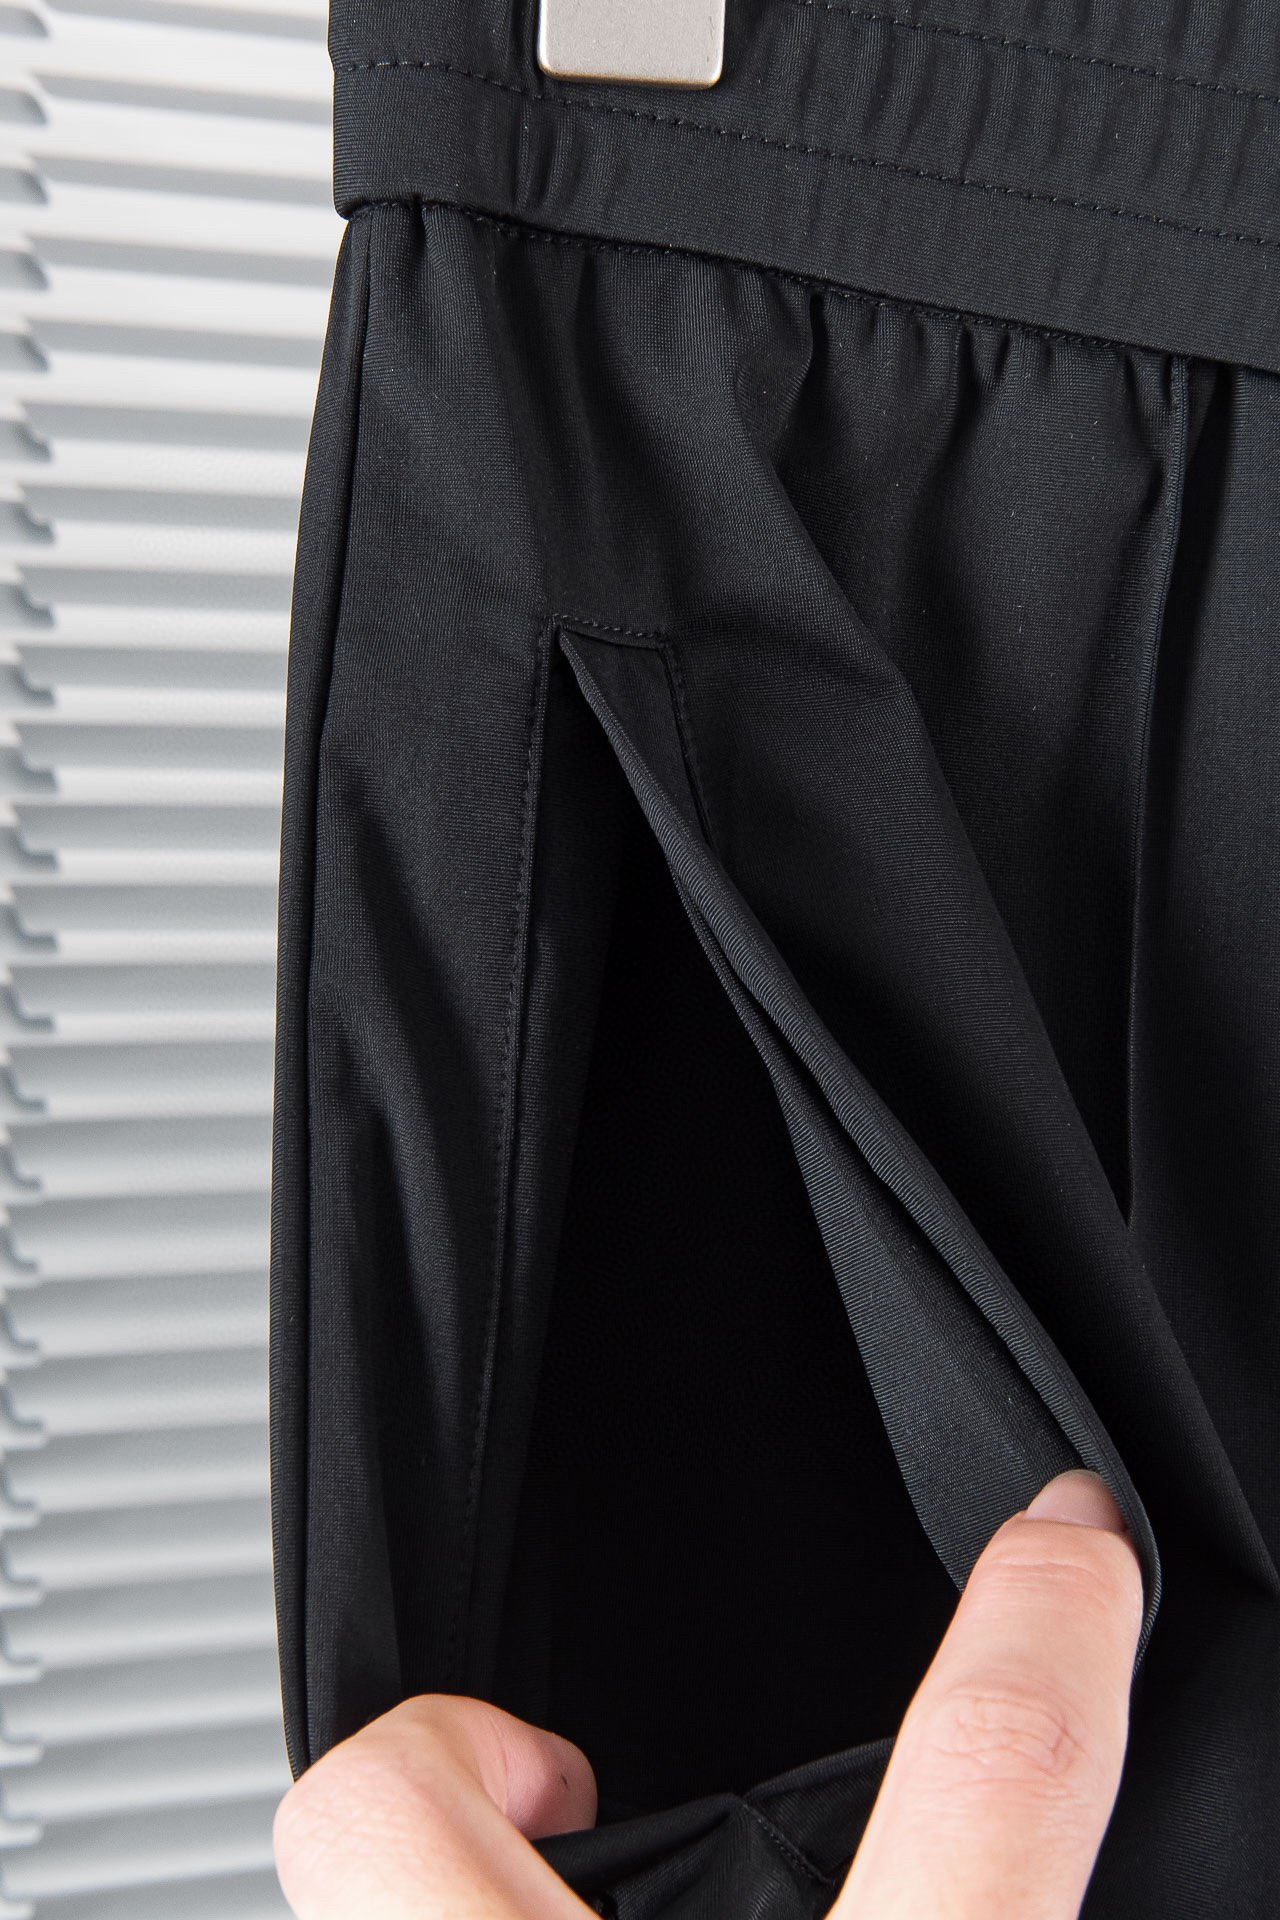 New#杰尼亚**Zegna24ss春夏新品套装#[Polo短袖+长裤]进口冰丝面料手感和回弹性都很棒摸